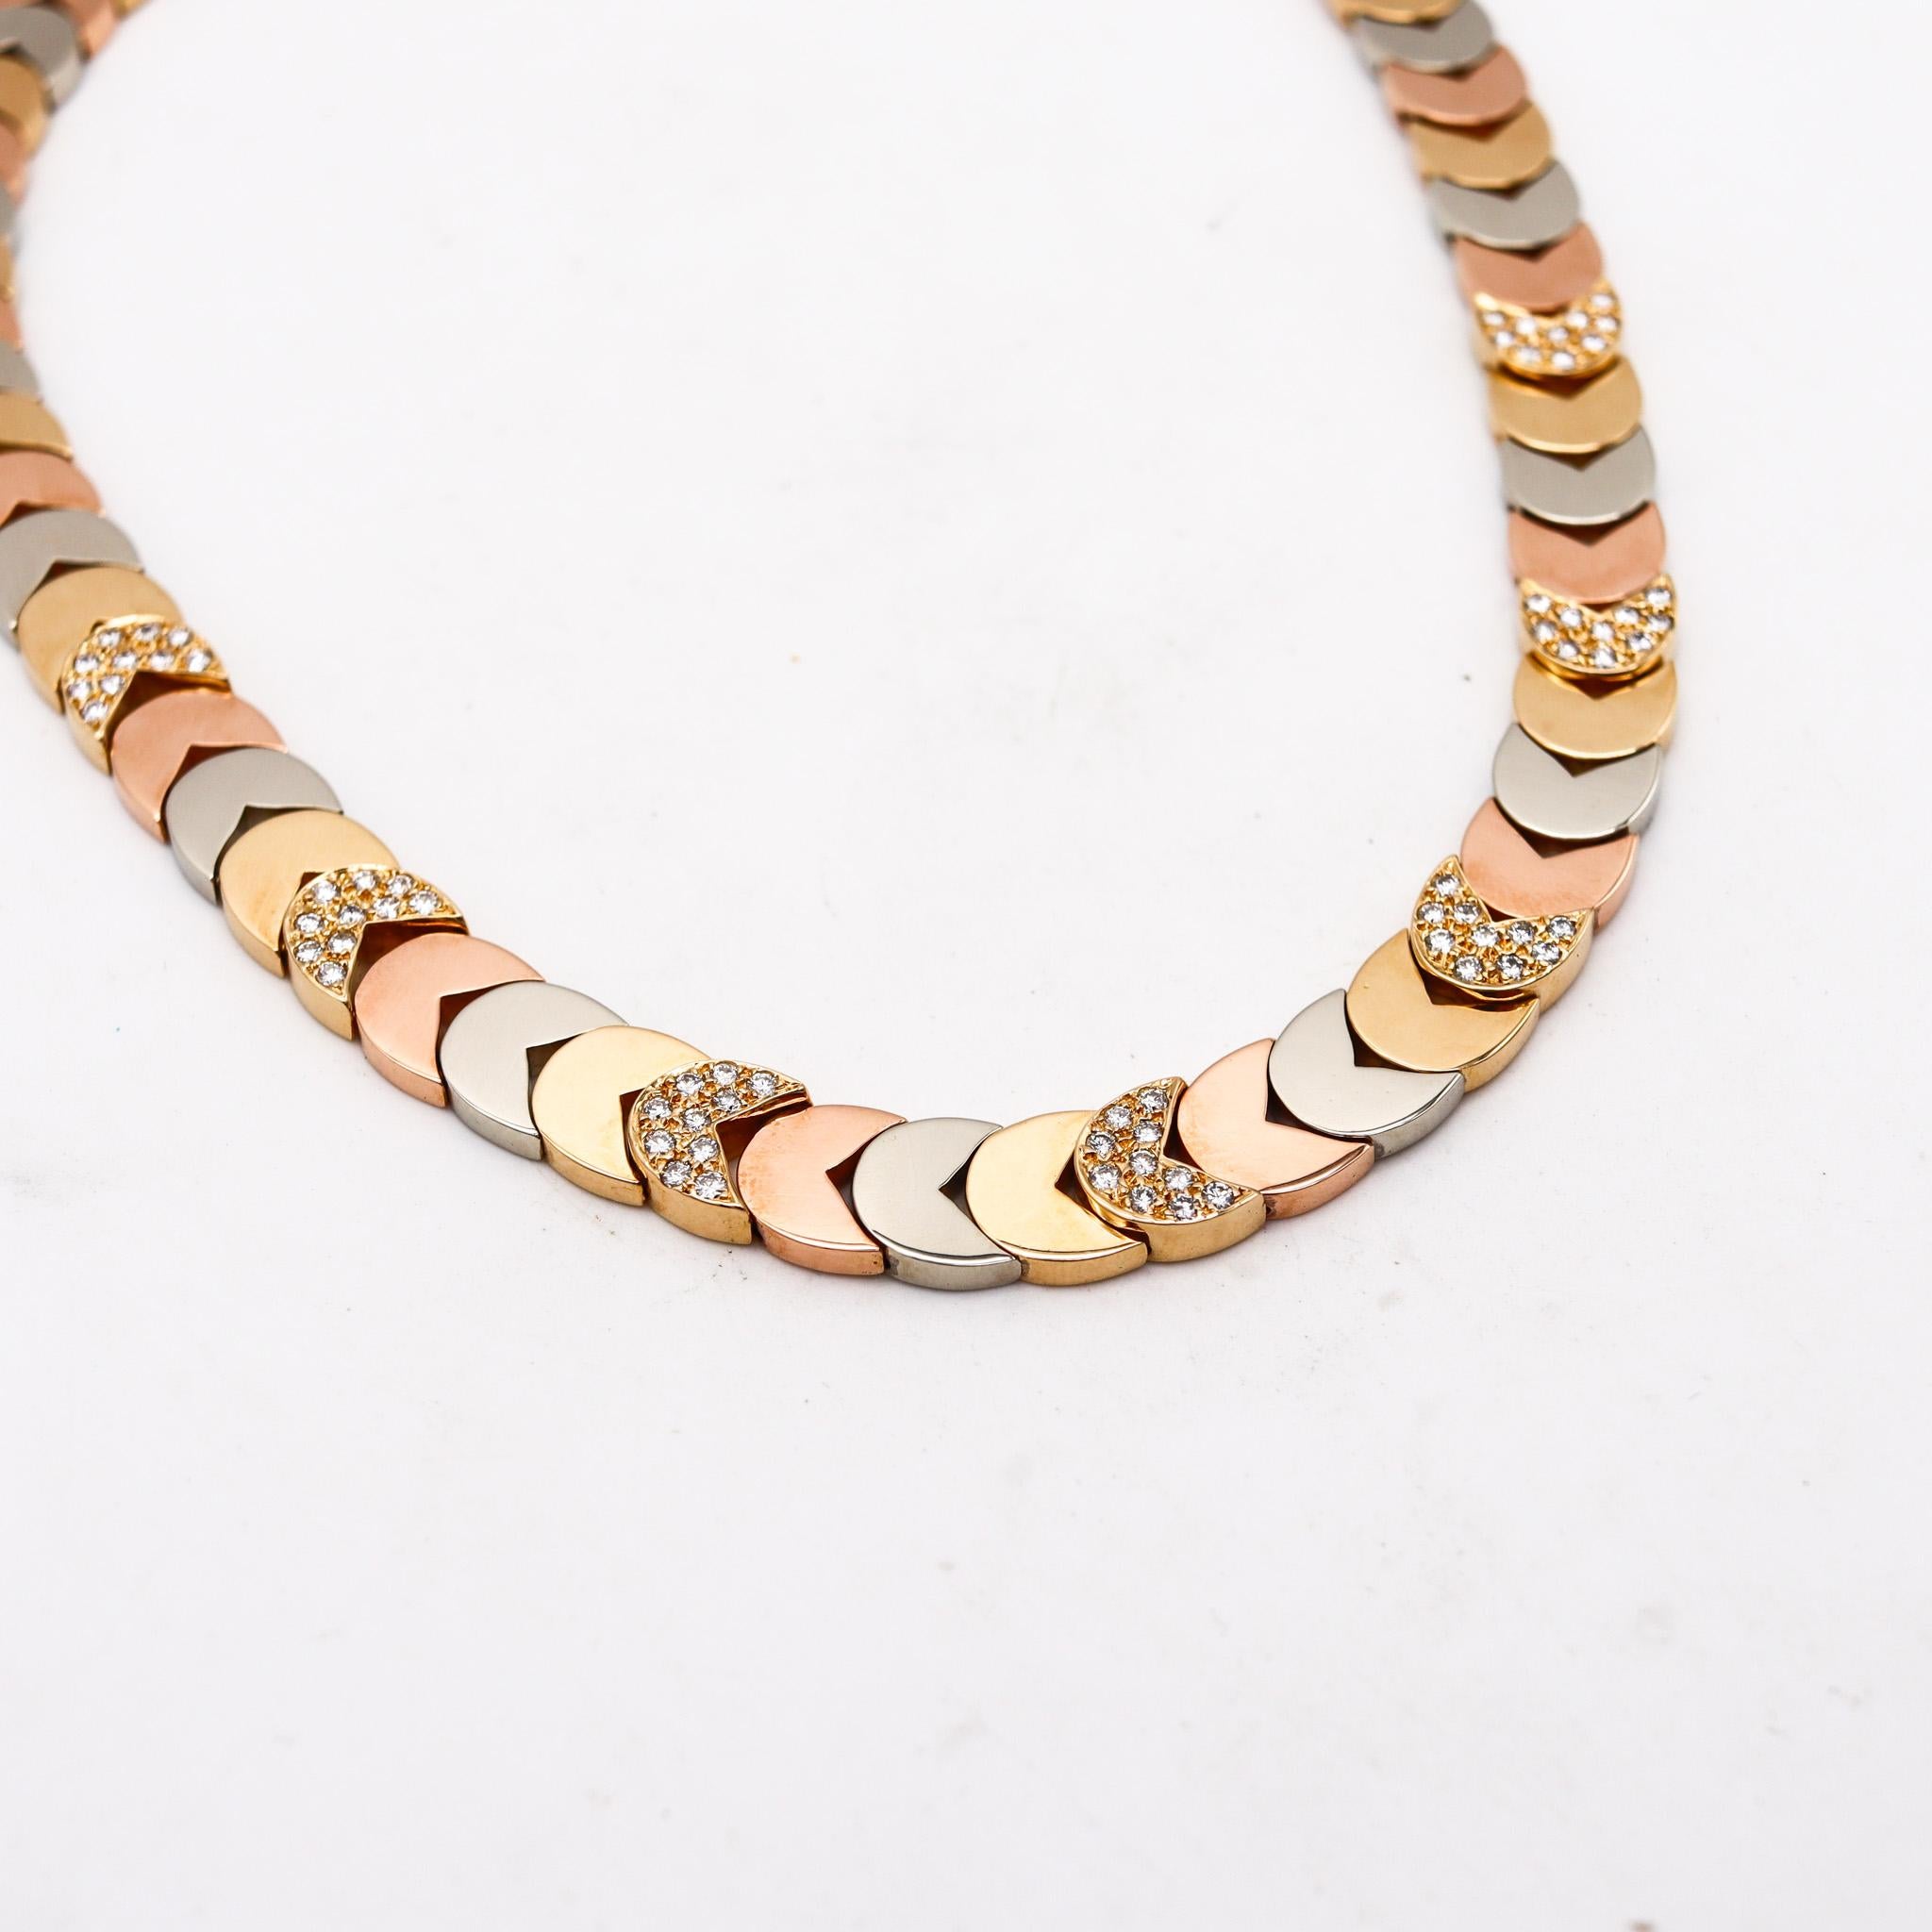 Modernist Van Cleef & Arpels Paris Diamonds Collar Necklace In Three colors 18Kt Gold For Sale